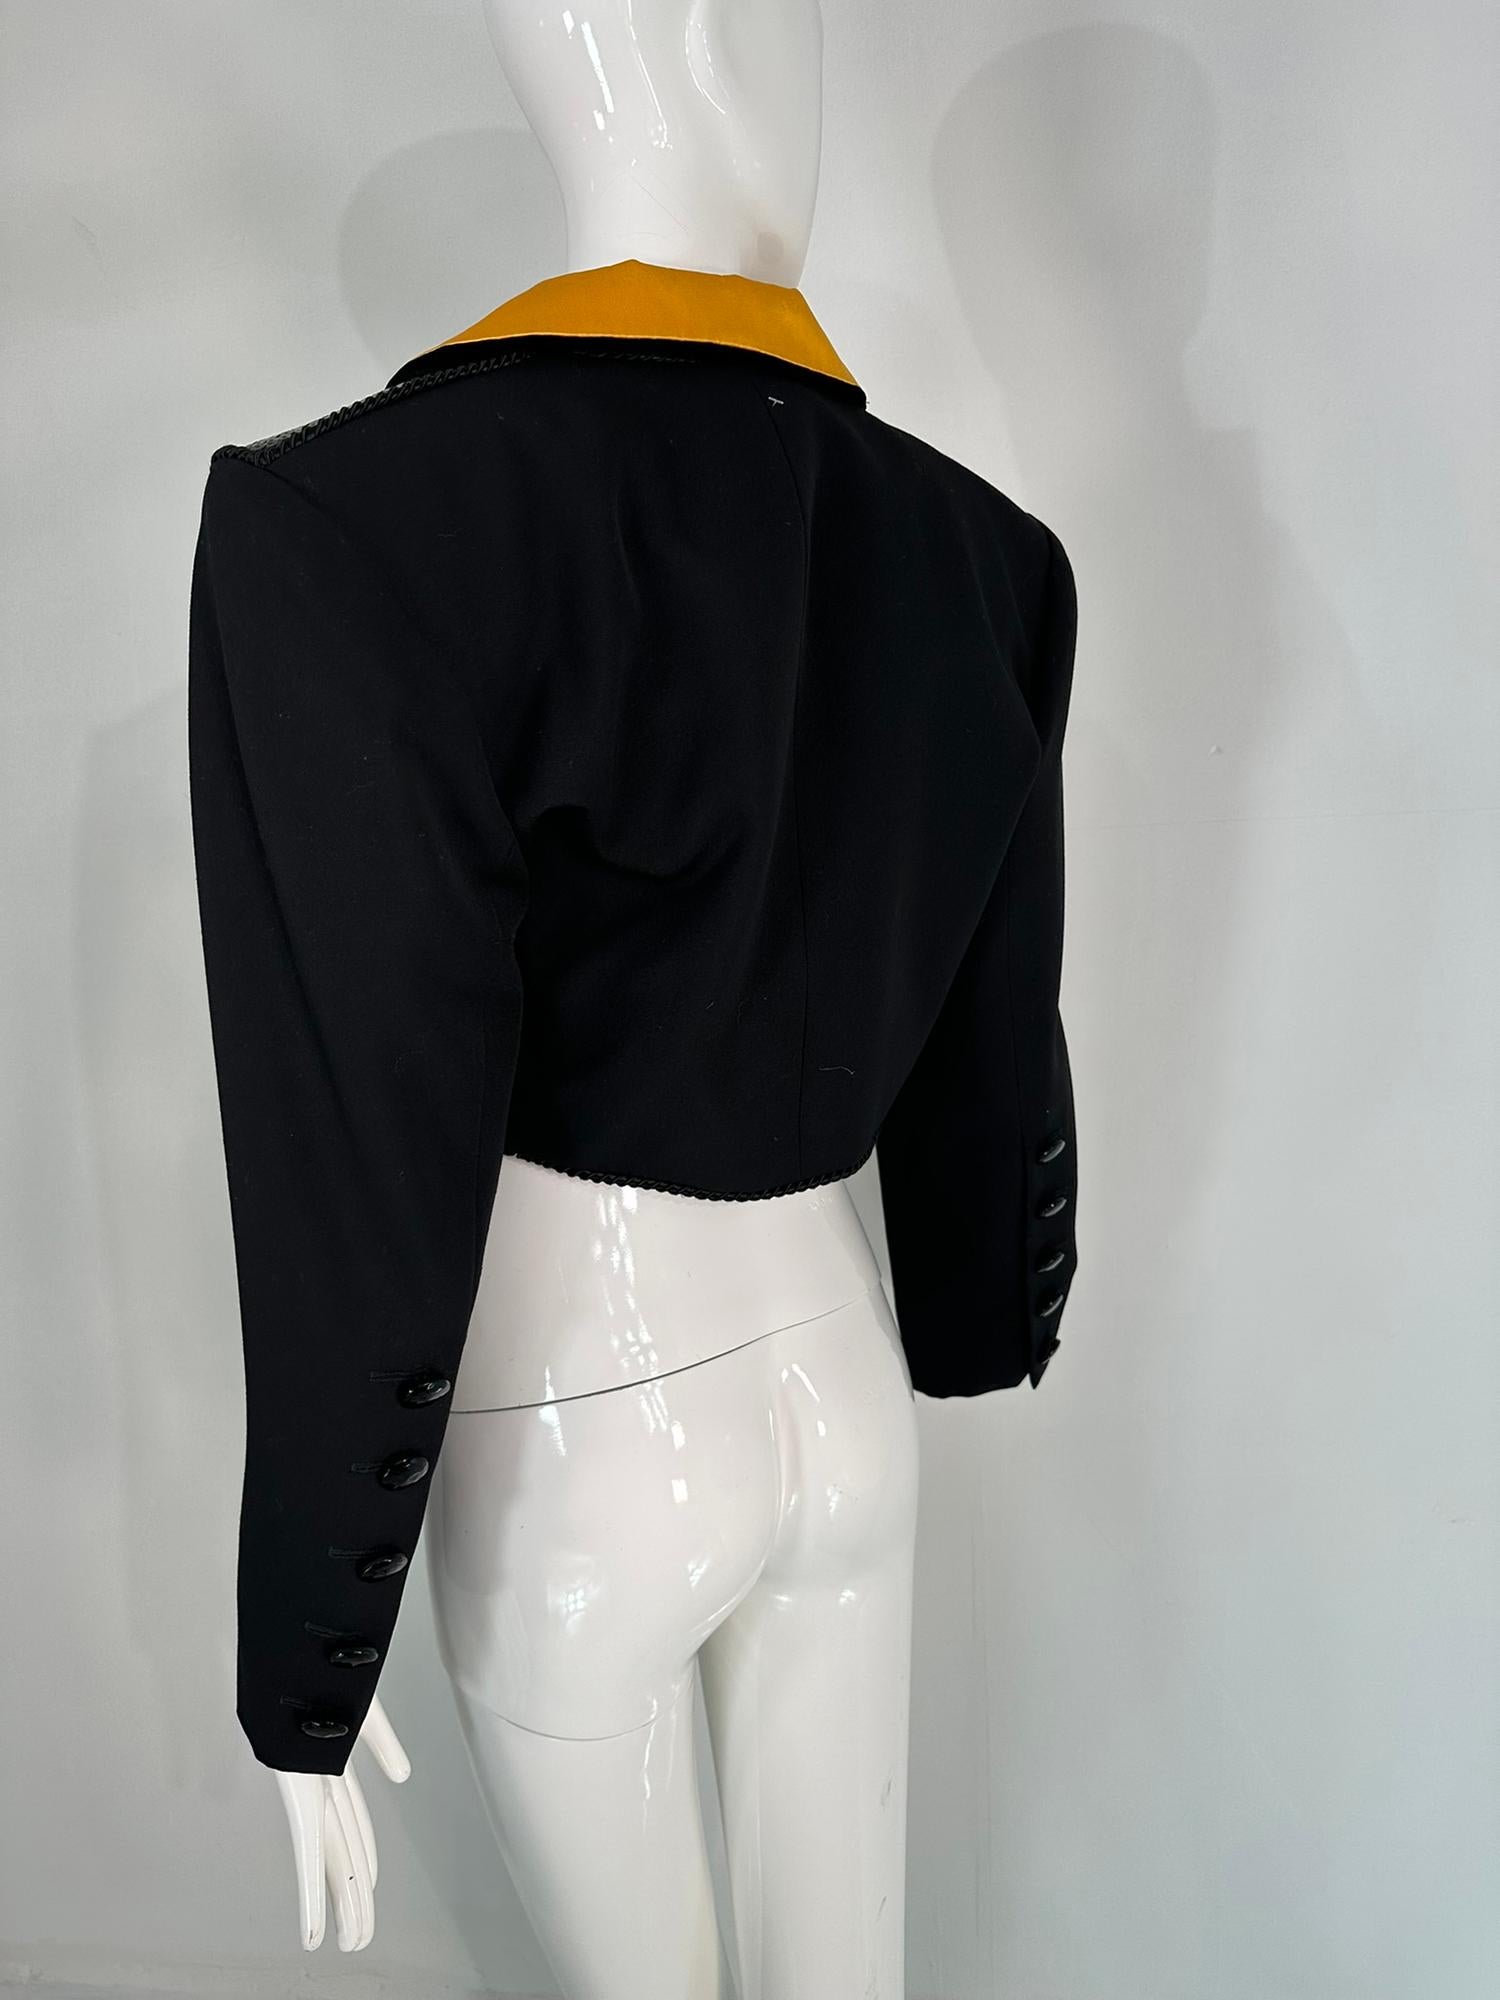 Yves Saint Laurent Rive Gauche Black Sequin Yellow Satin Cropped Jacket 1990s For Sale 4